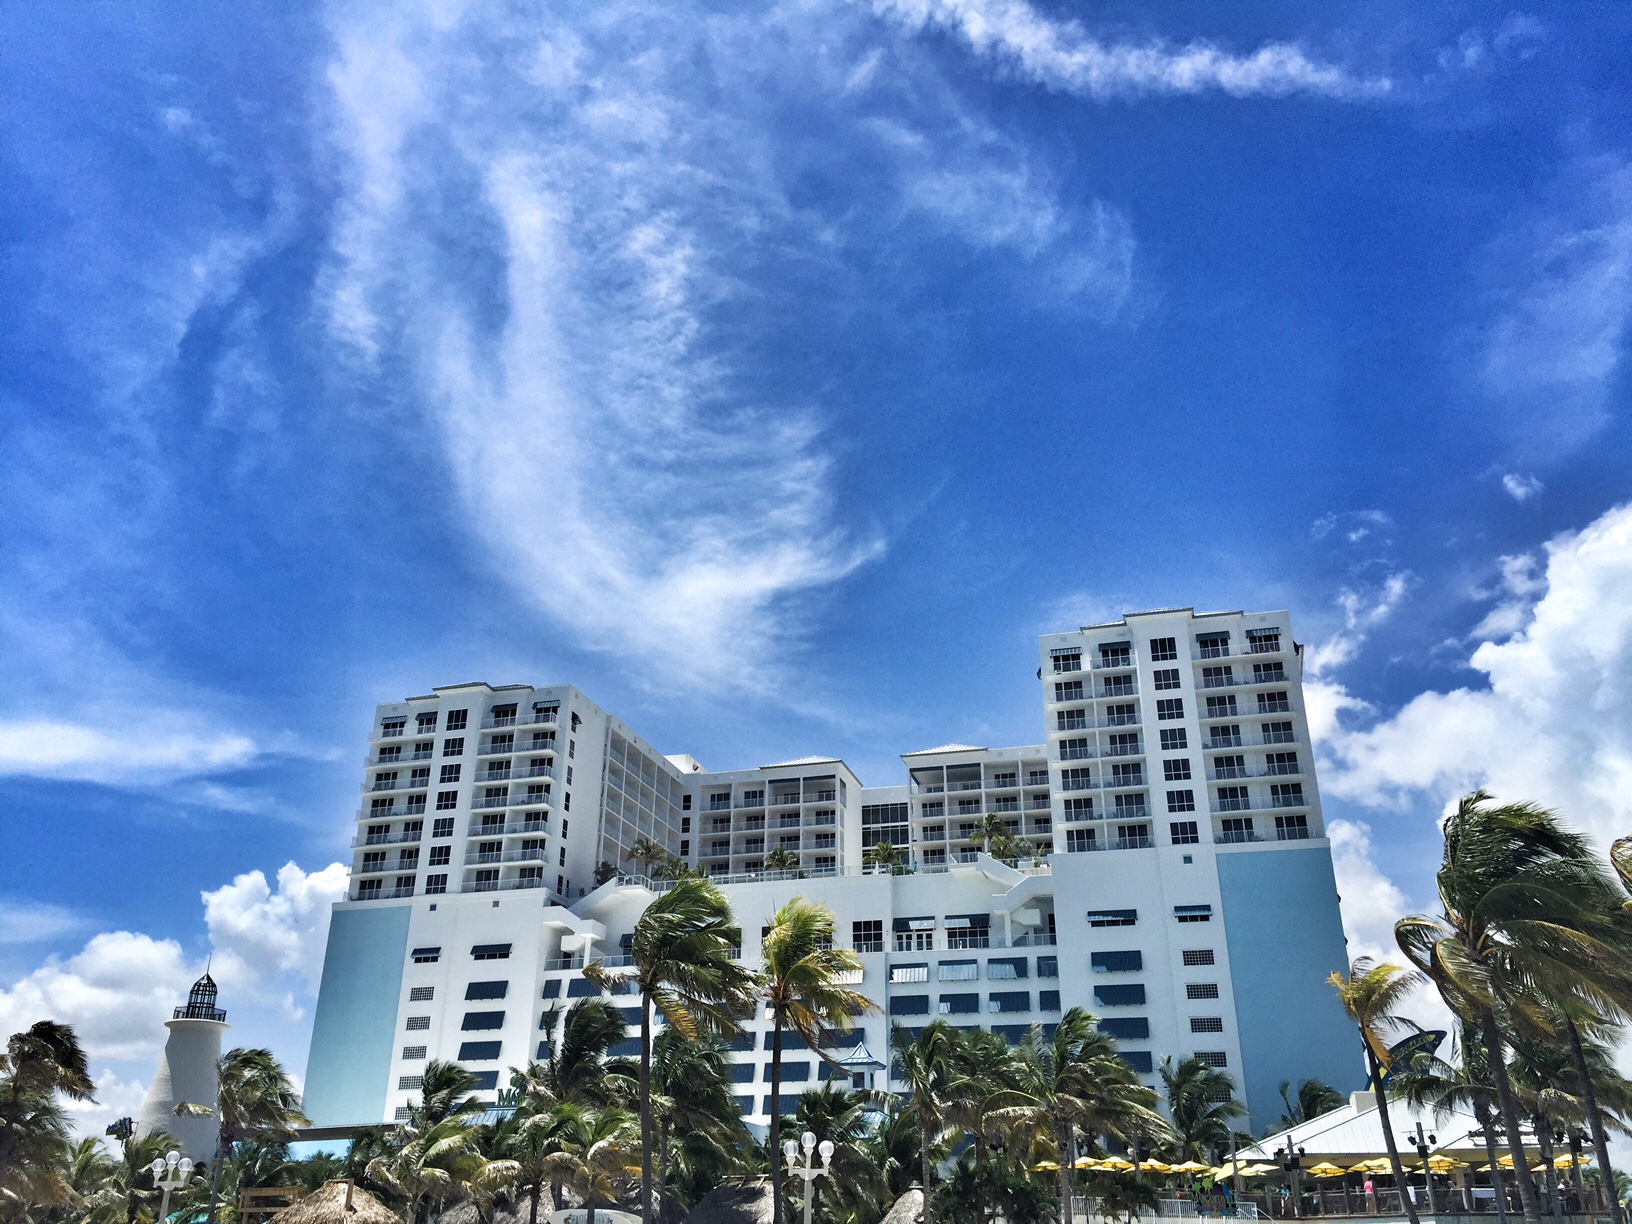 Margaritaville Beach Resort Hollywood Florida | #DestinationParadise | #LoveFl | South Florida Family Friendly Hotels | Best hotels in Florida | Florida Vacation | Best Hollywood Florida hotel Acupful.com | Mandy Carter travel blogger | |Fort Lauderdale Hotel